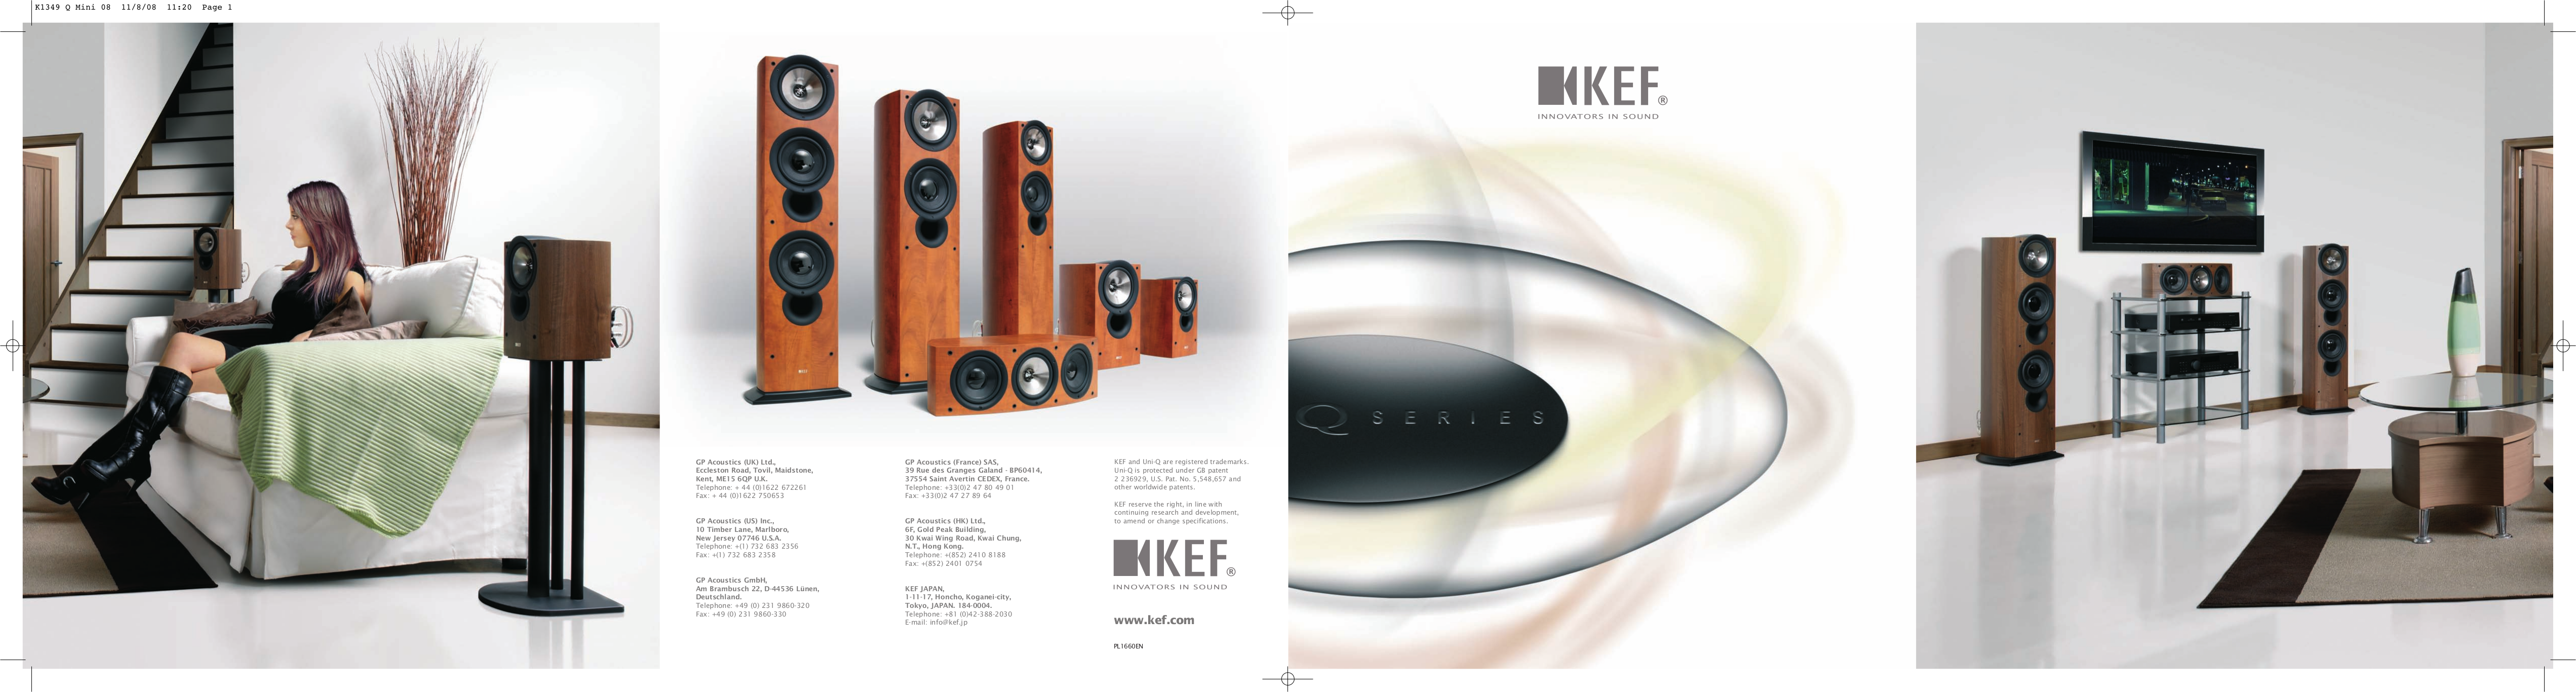 Download Free Pdf For Kef Iq90 Speaker Manual